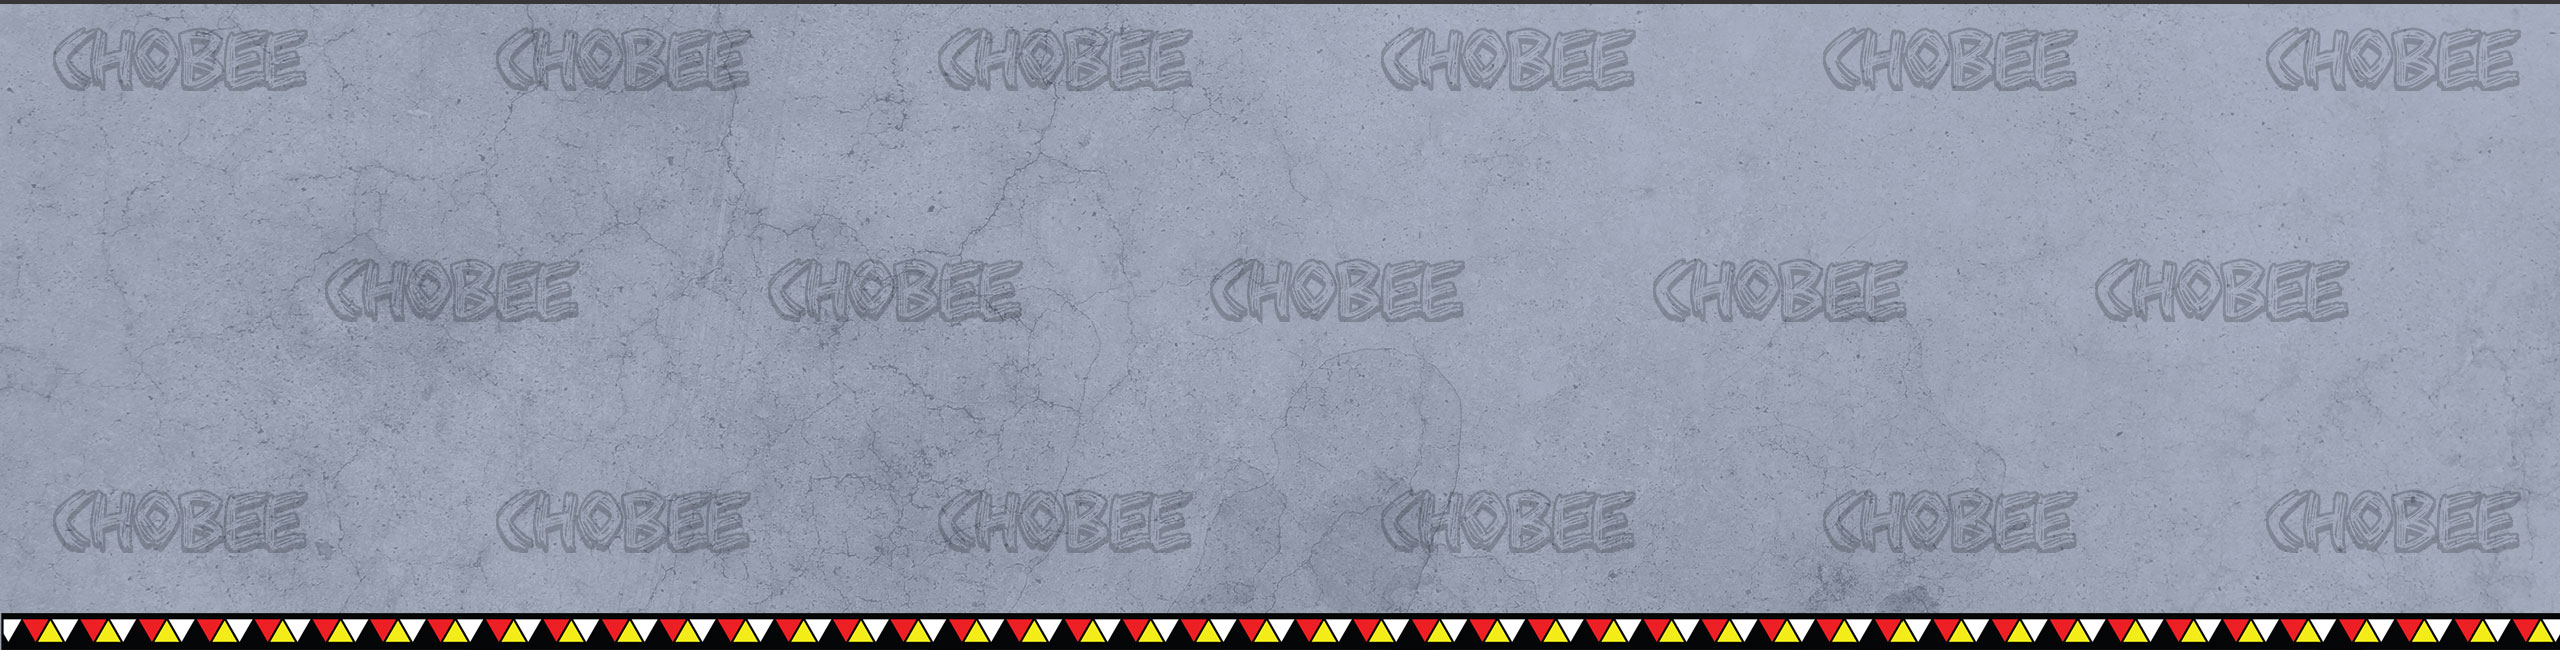 background image Chobee